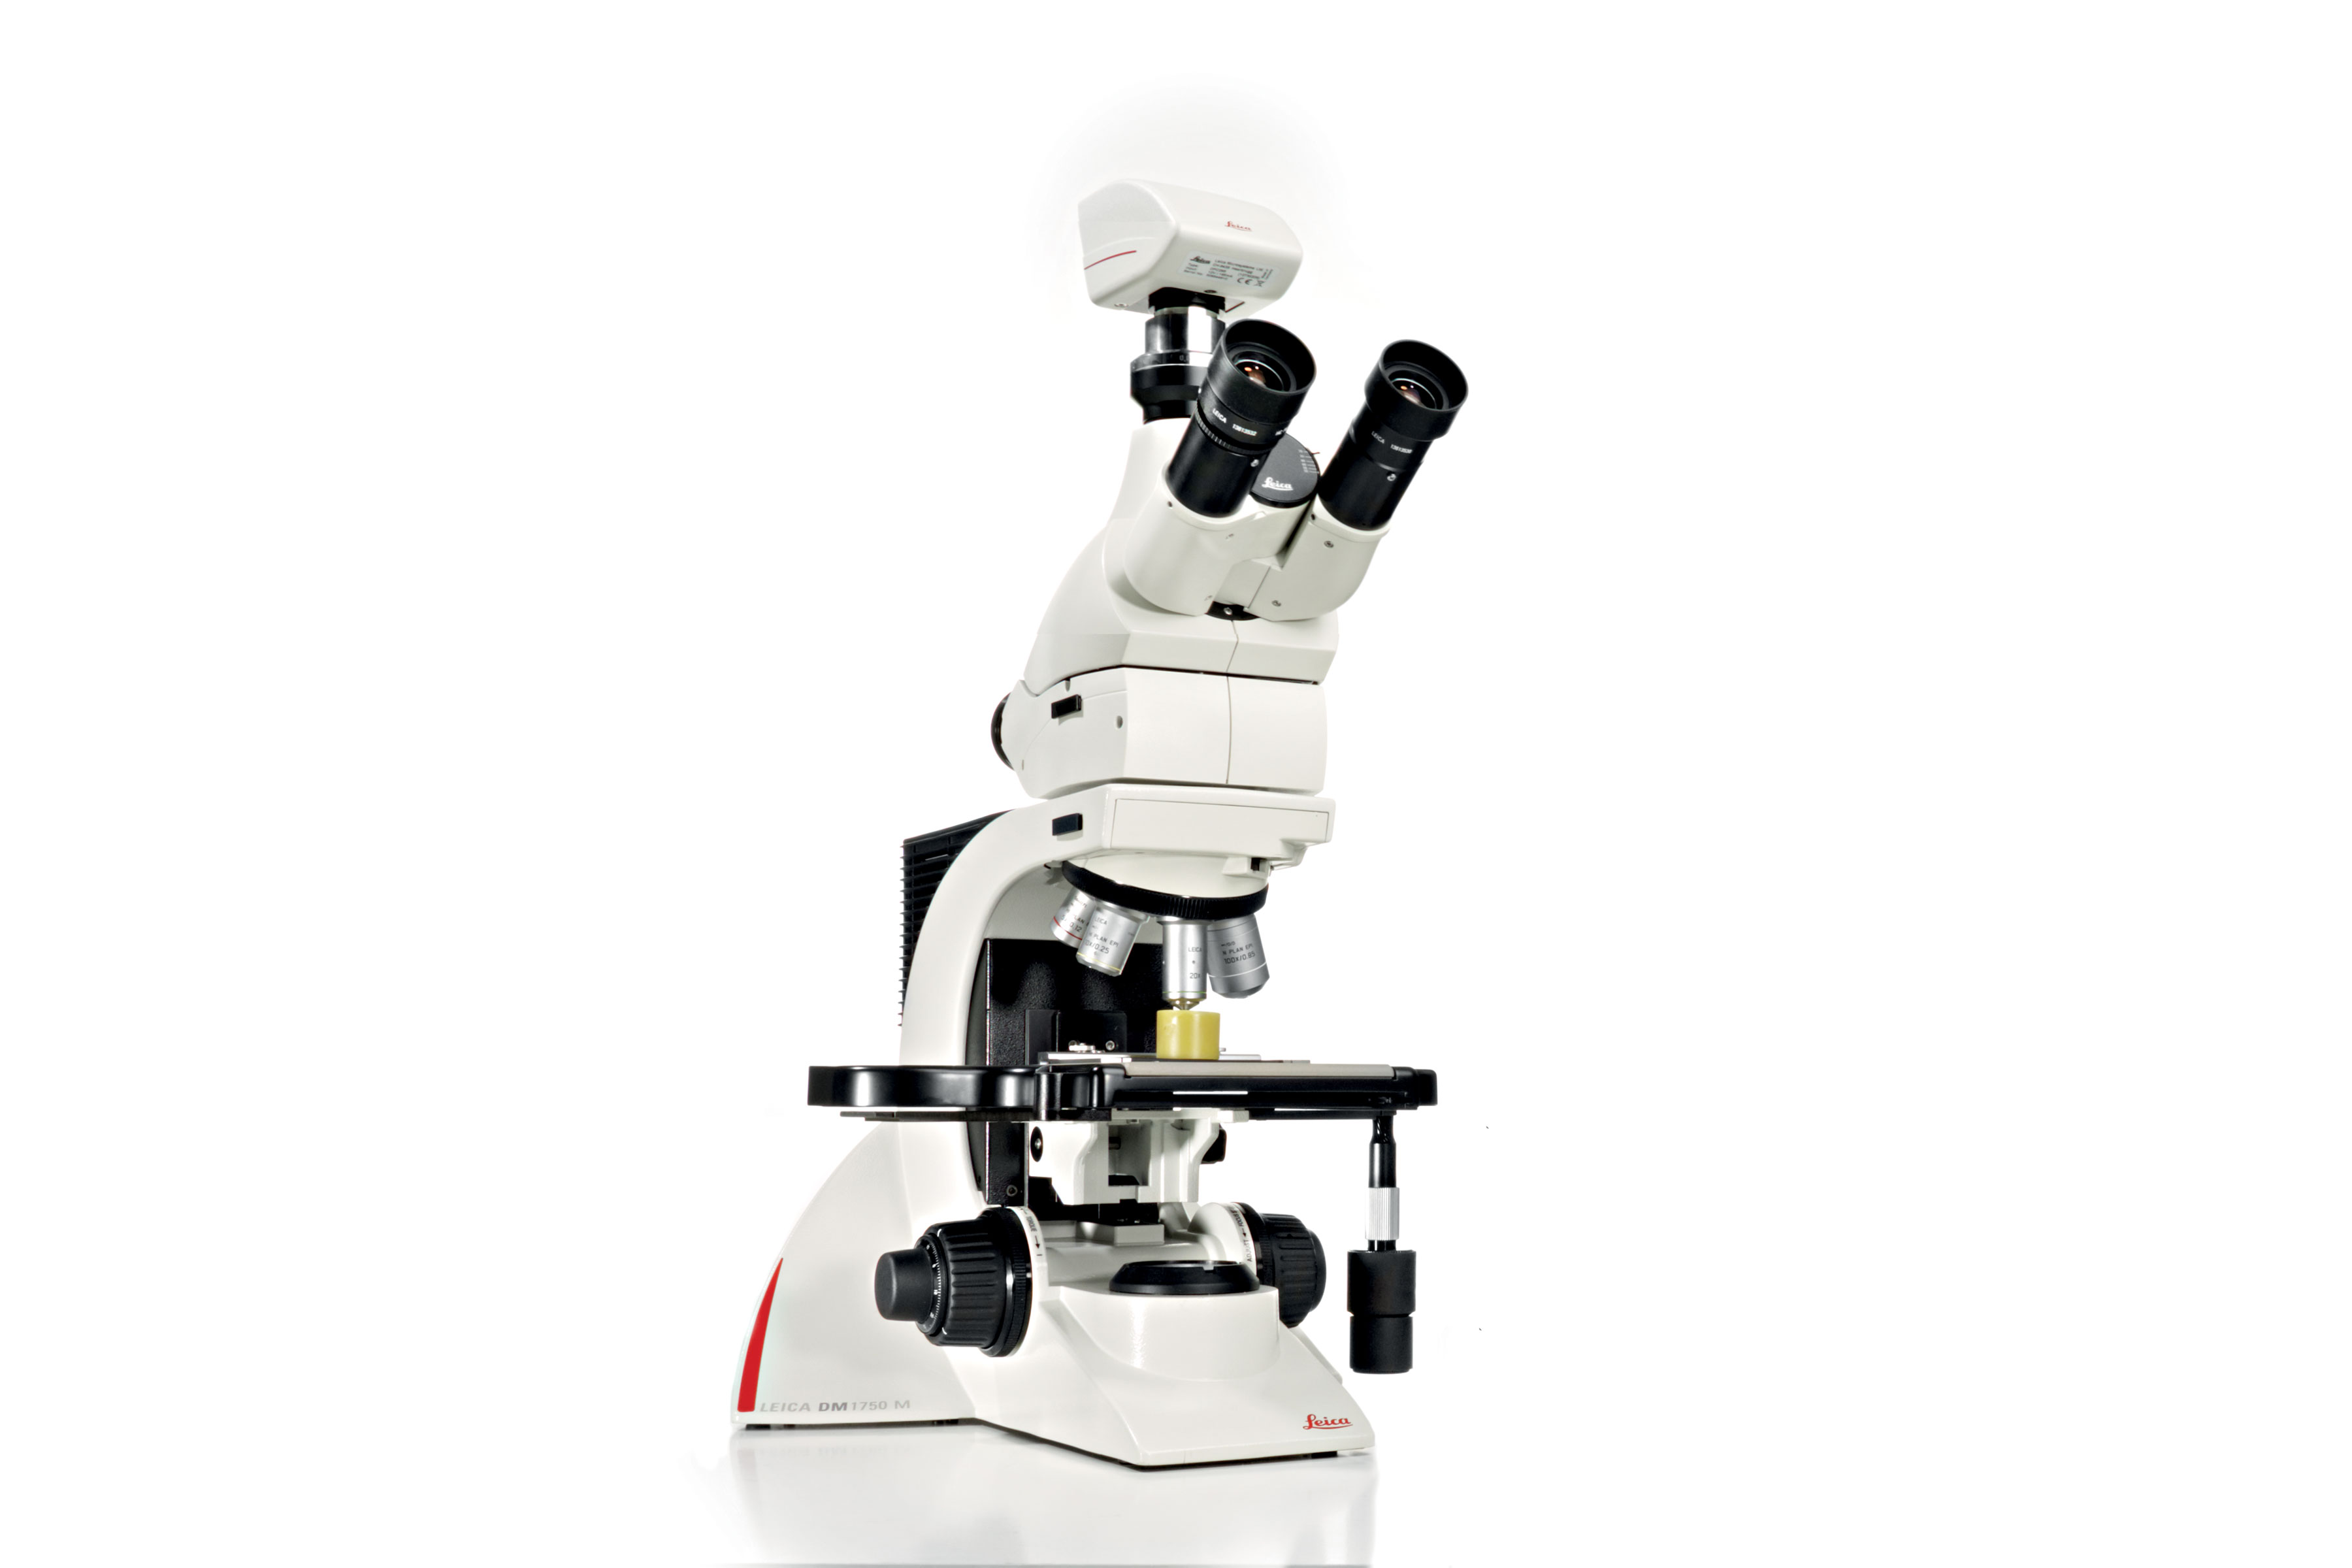  Leica DM1750 M Materials Microscope